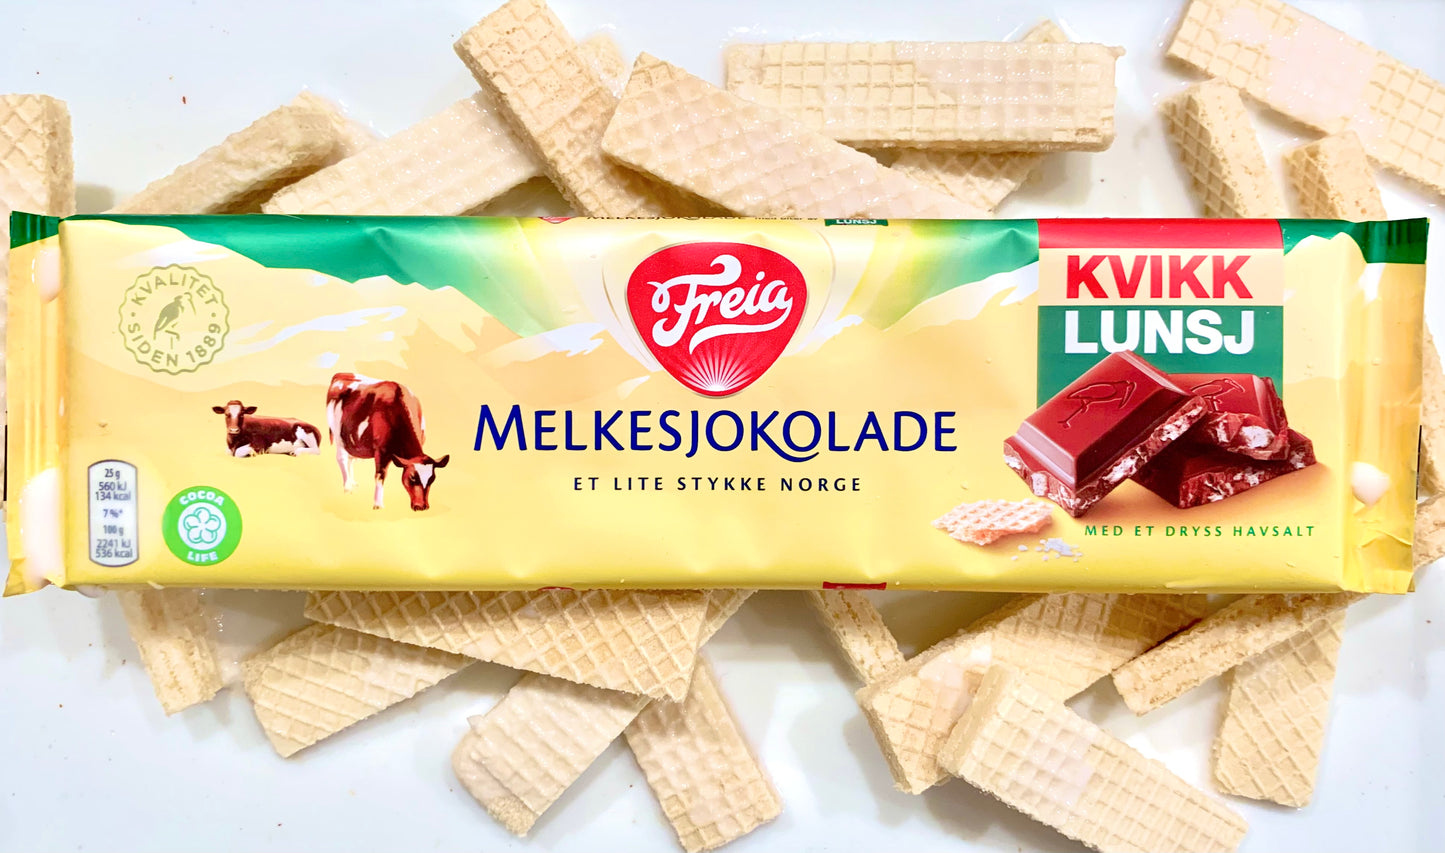 Freia Melkesjokolade Kvikk Lunsj - Freia Milk Chocolate with Kvikk Lunsj 200 grams (7 oz)